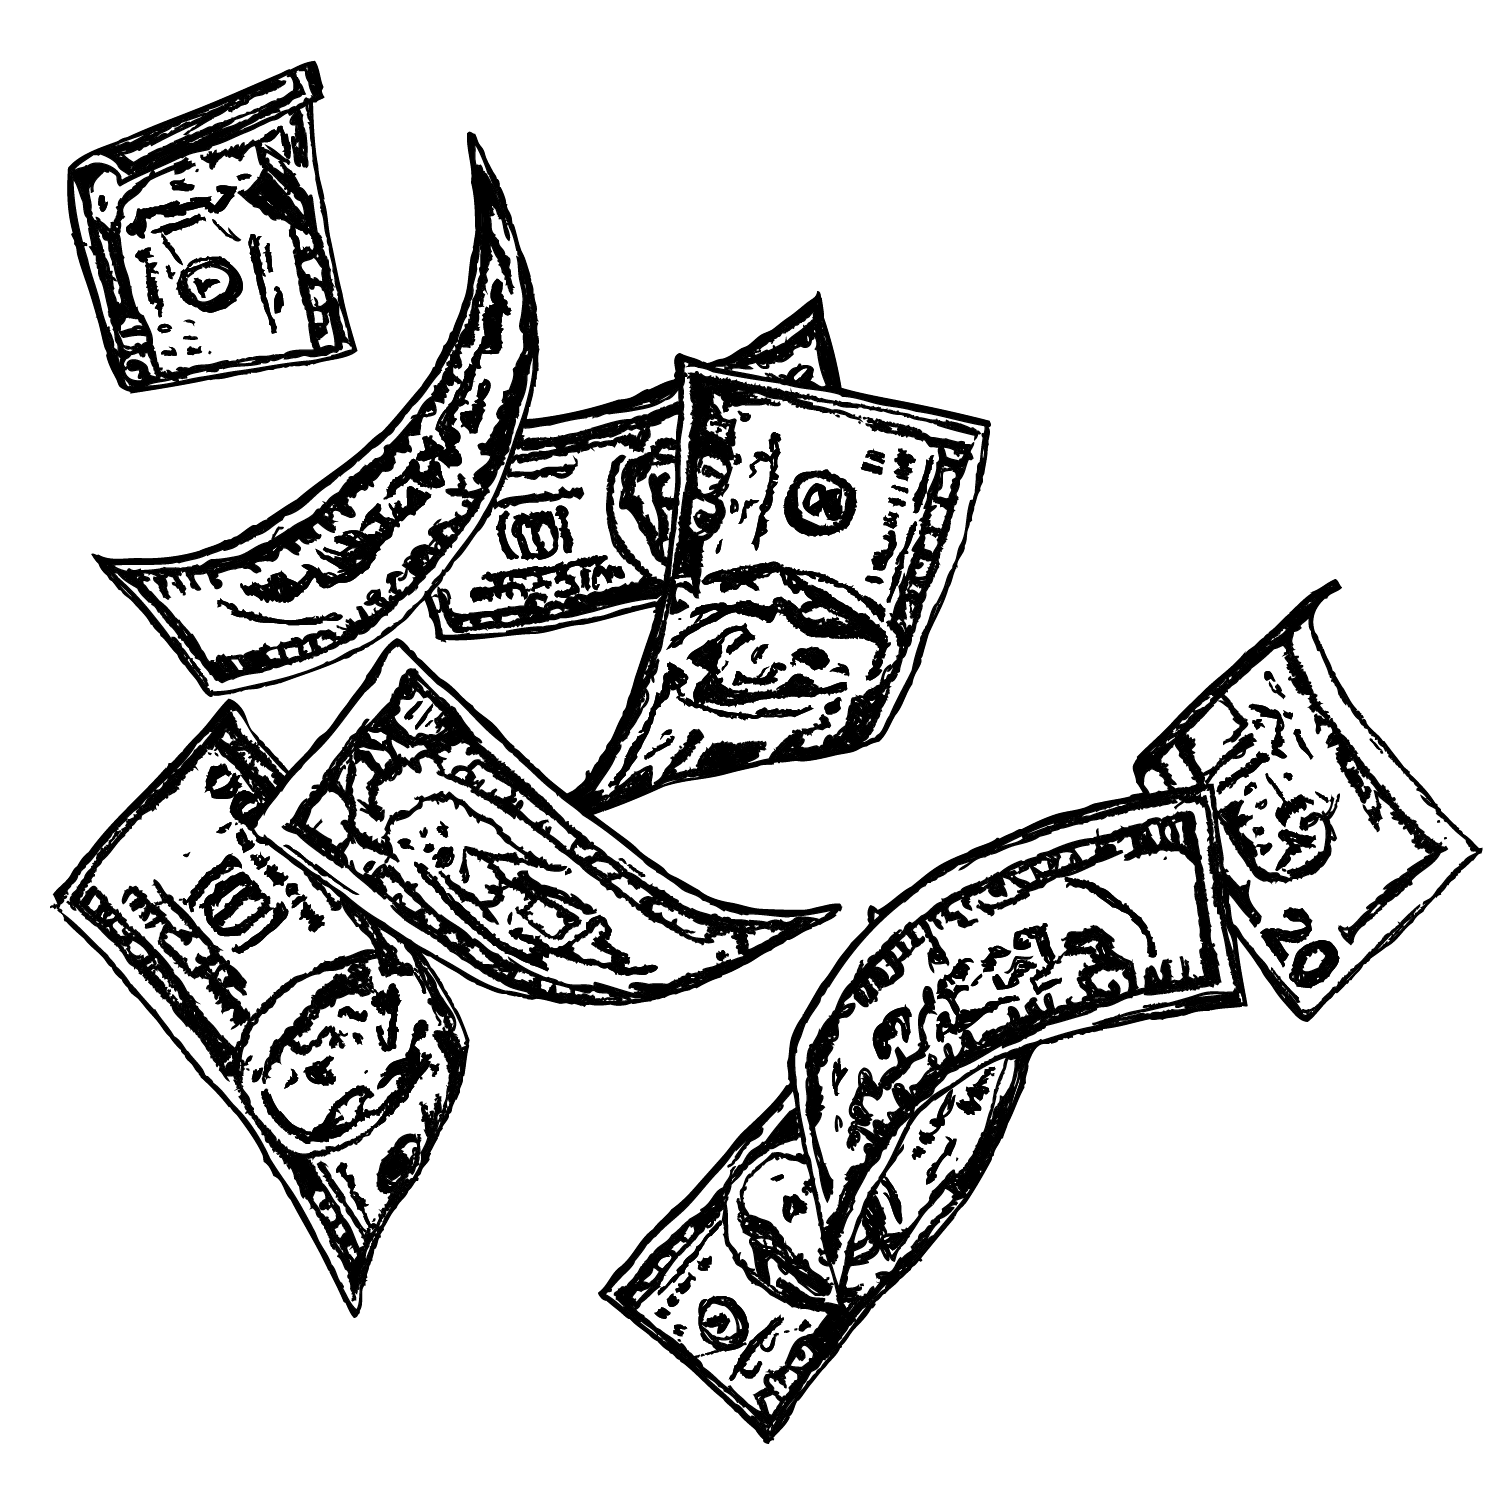 Money Bag Icon Clipart